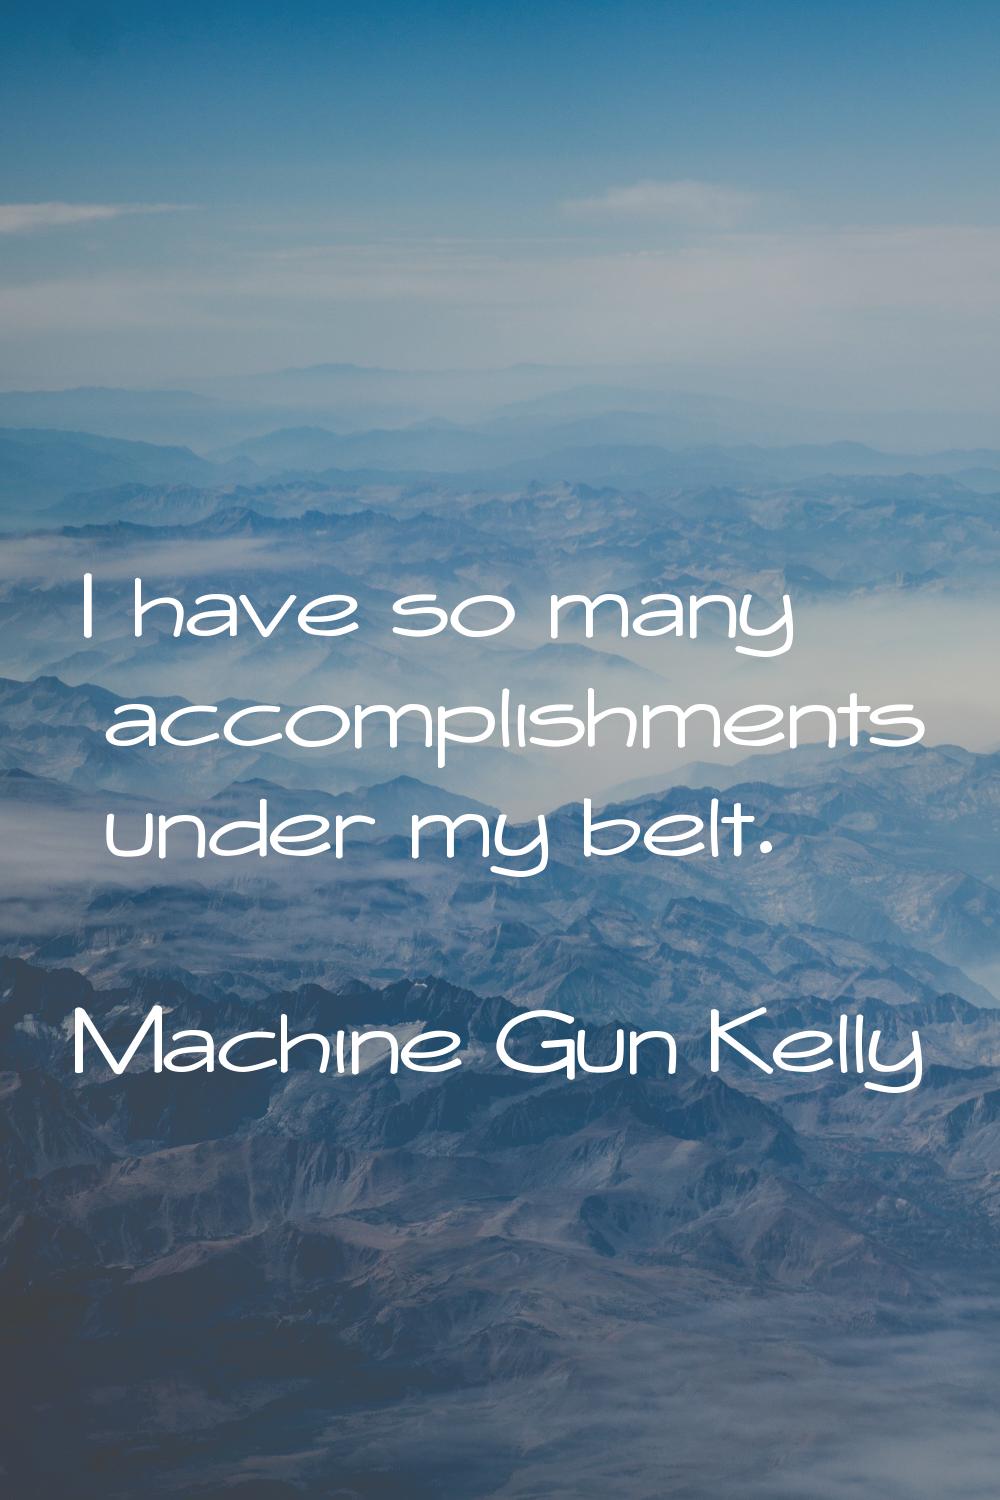 I have so many accomplishments under my belt.